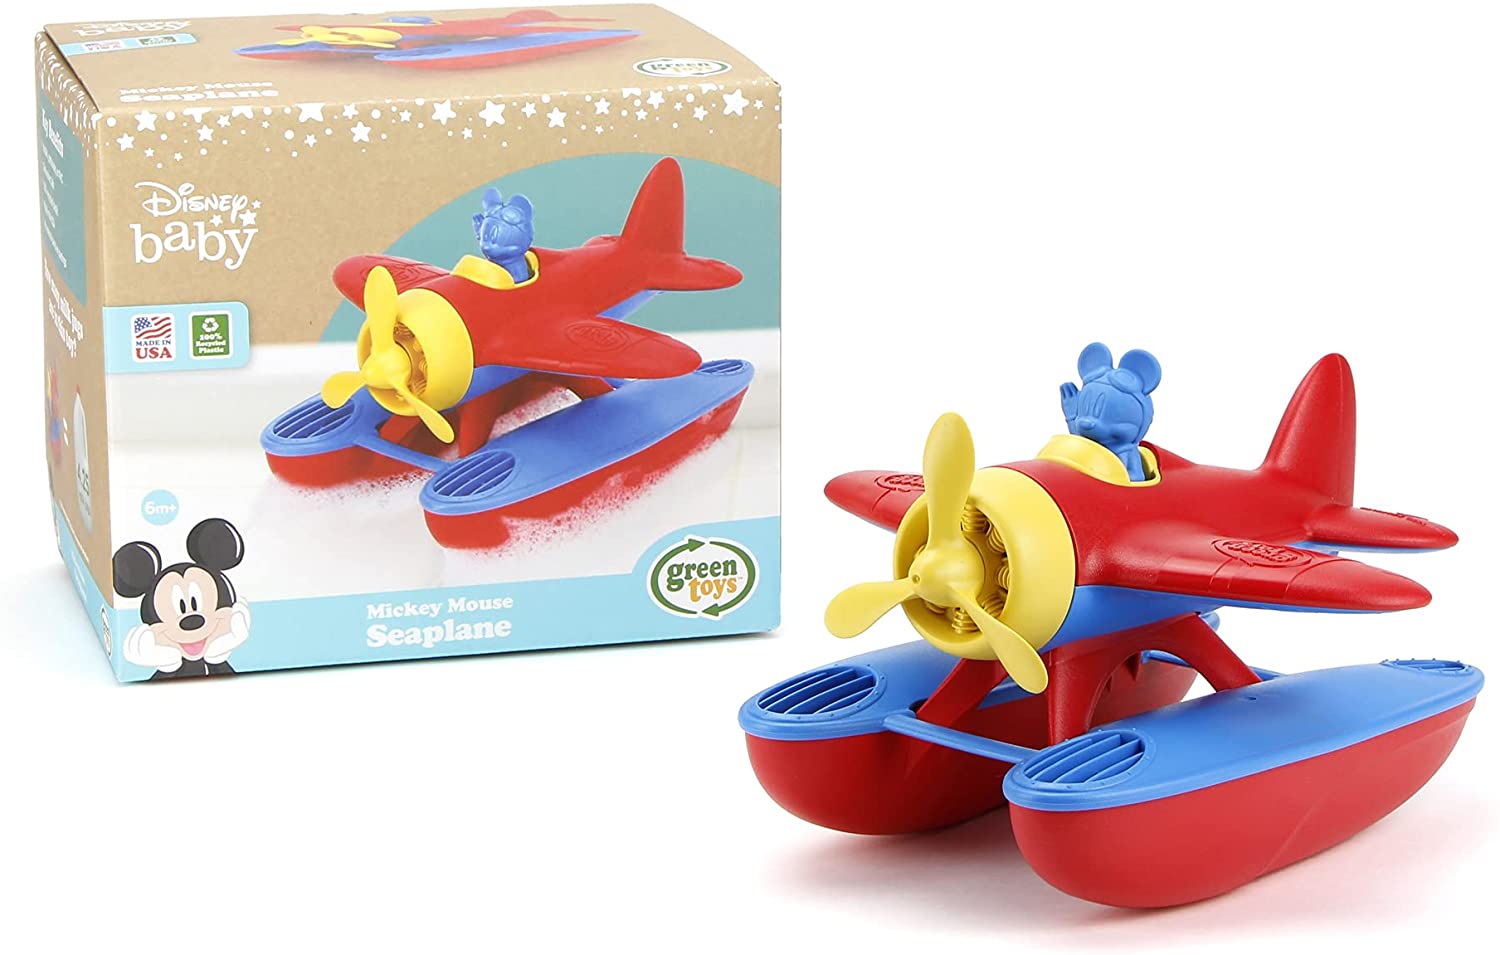 Green Toys Disney Baby Mickey Mouse Floating Seaplane Bath Toy $15.80 + FS w/ Amazon Prime or FS on $25+